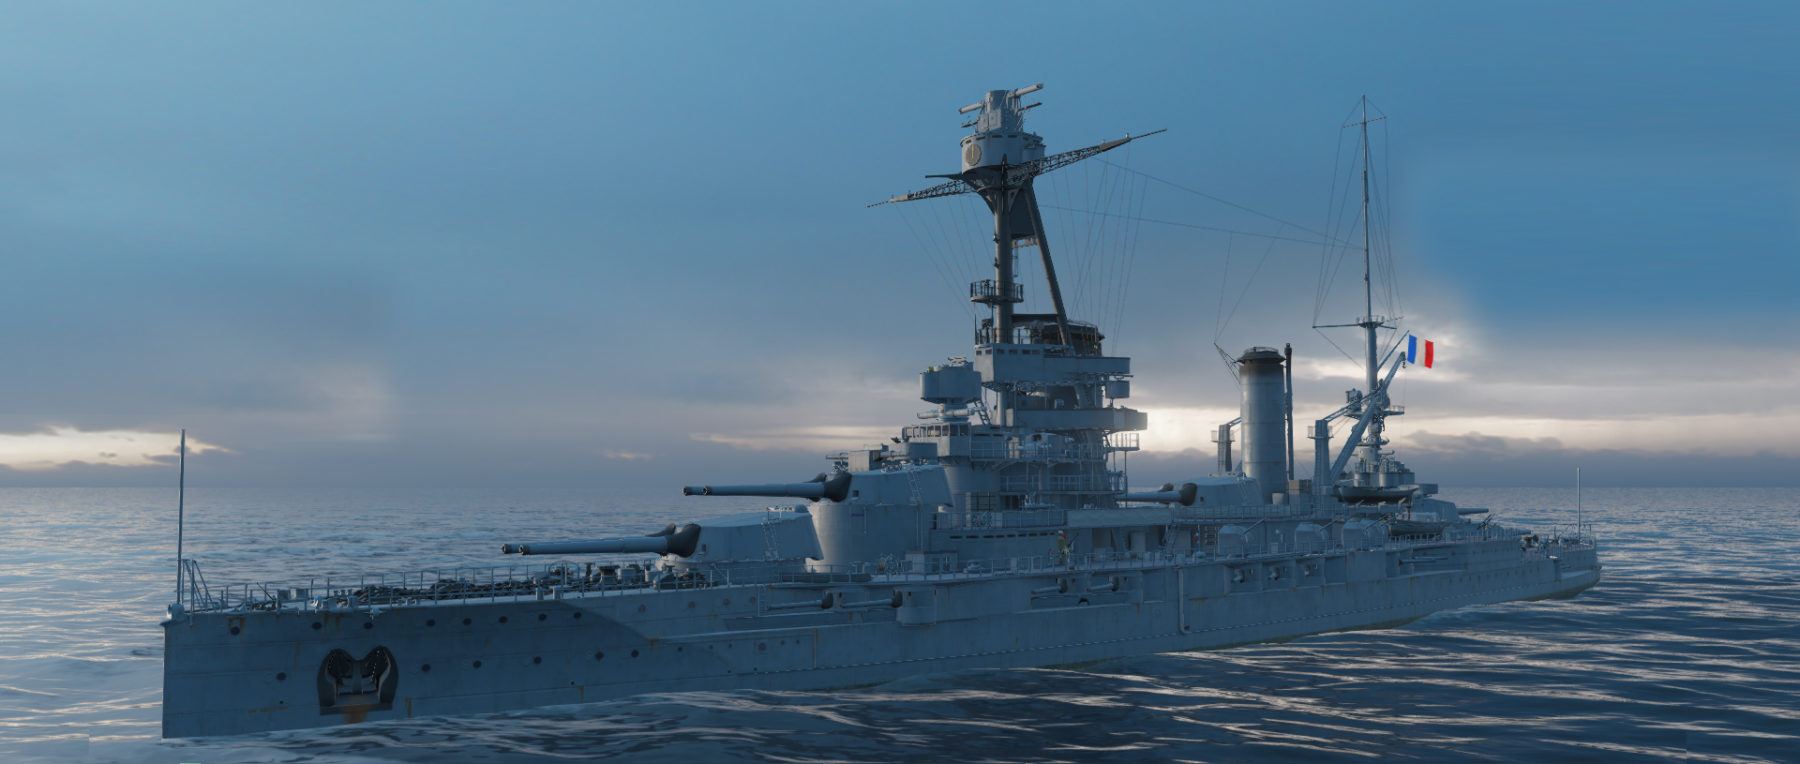 Bretagne class battleships